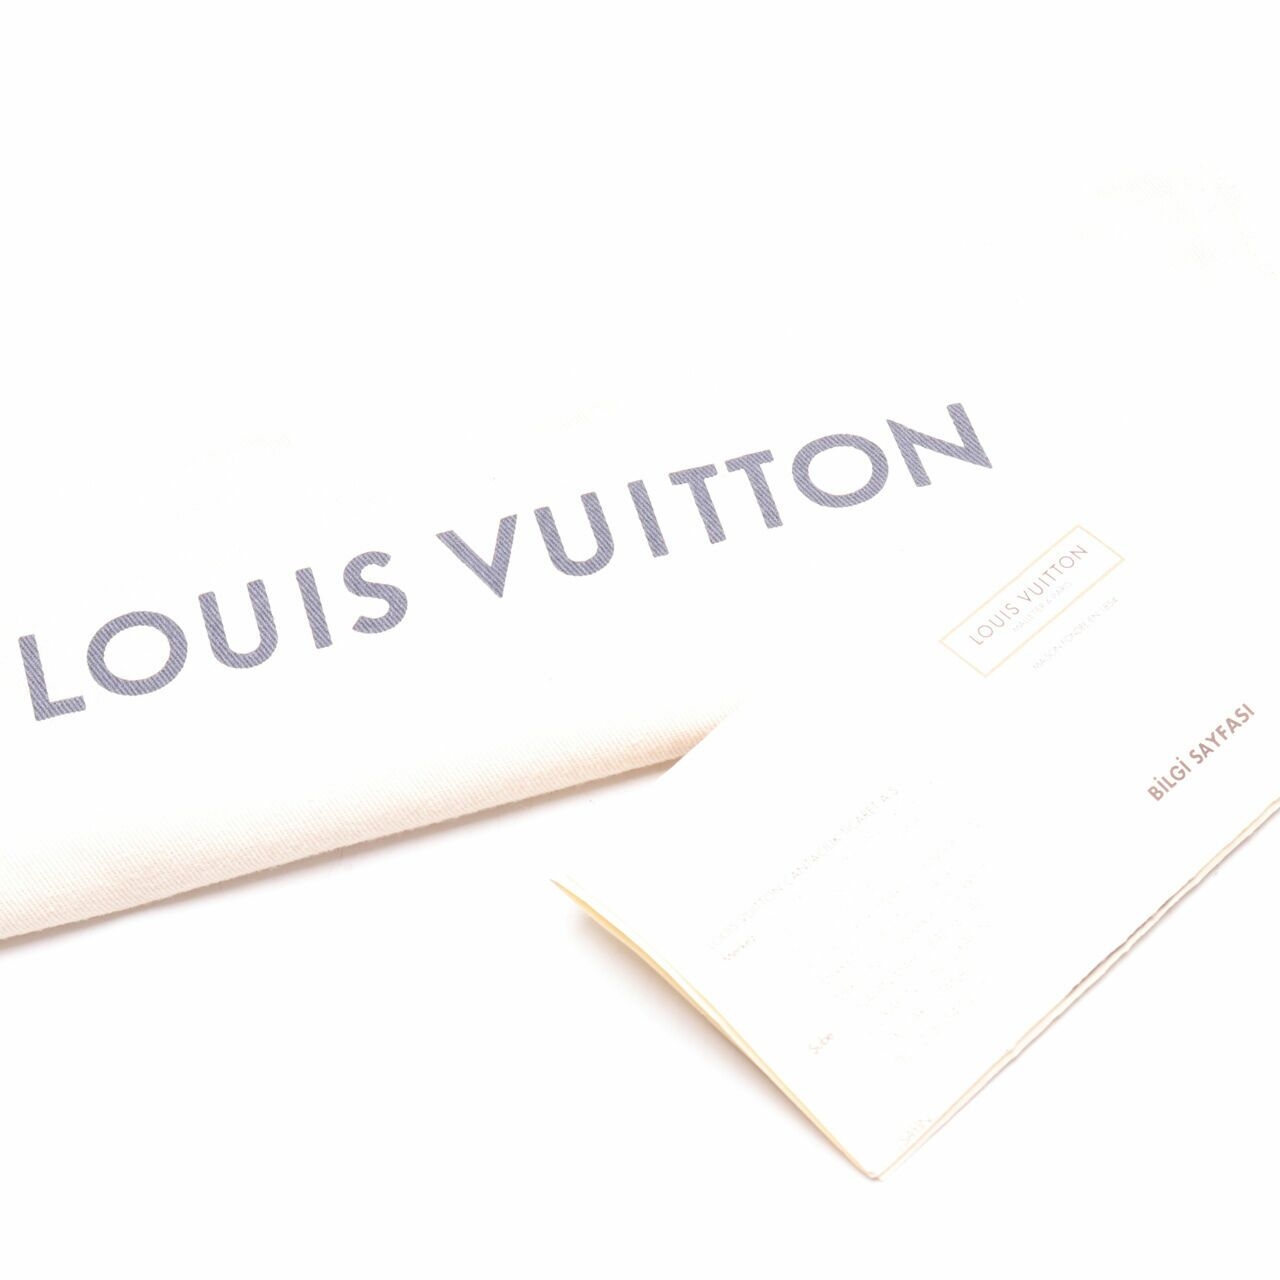 Louis Vuitton Crafty Pochette Toilette Pouch